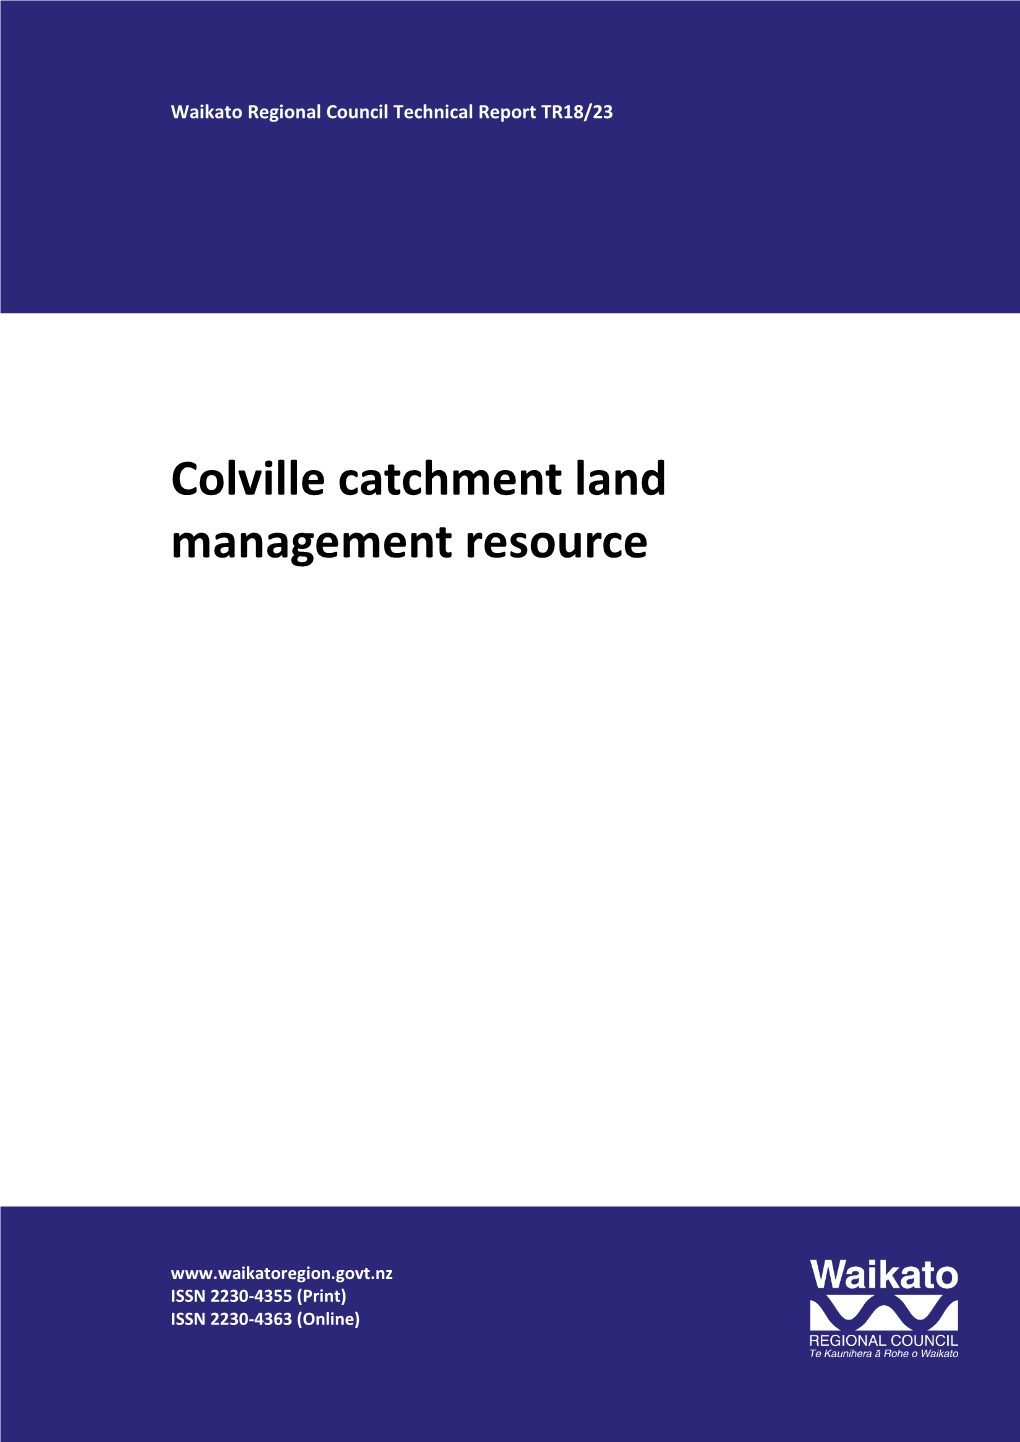 Colville Catchment Land Management Resource